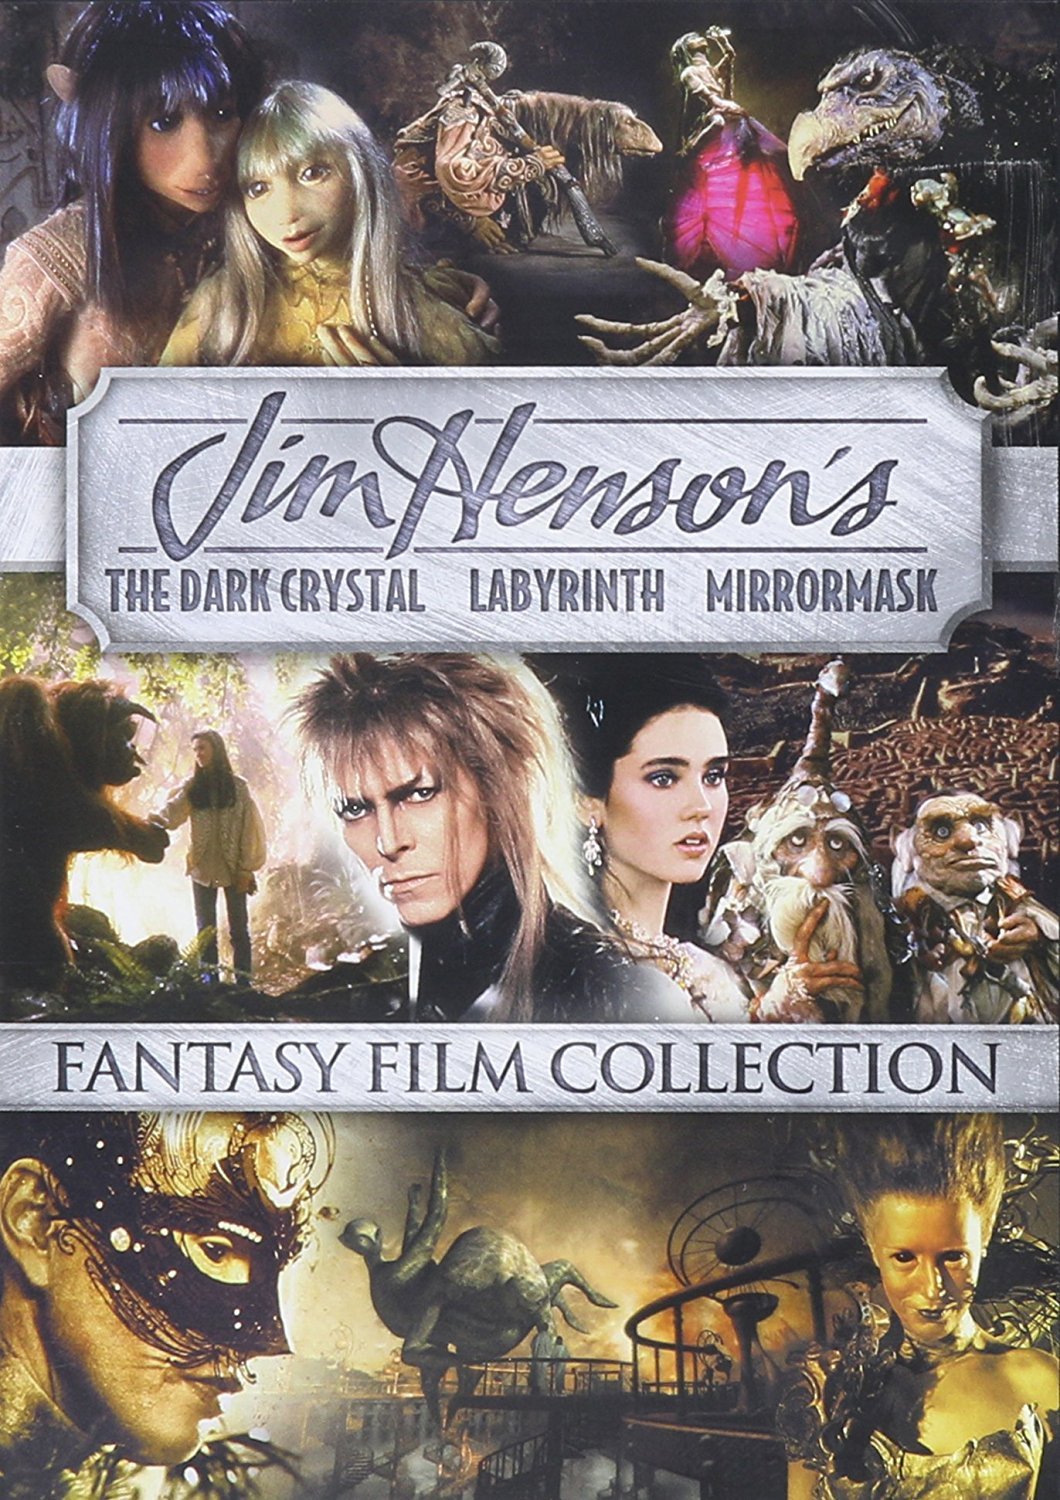 Dark Crystal/Labyrinth/Mirrormask (Jim Henson's: Fantasy Film Collection)